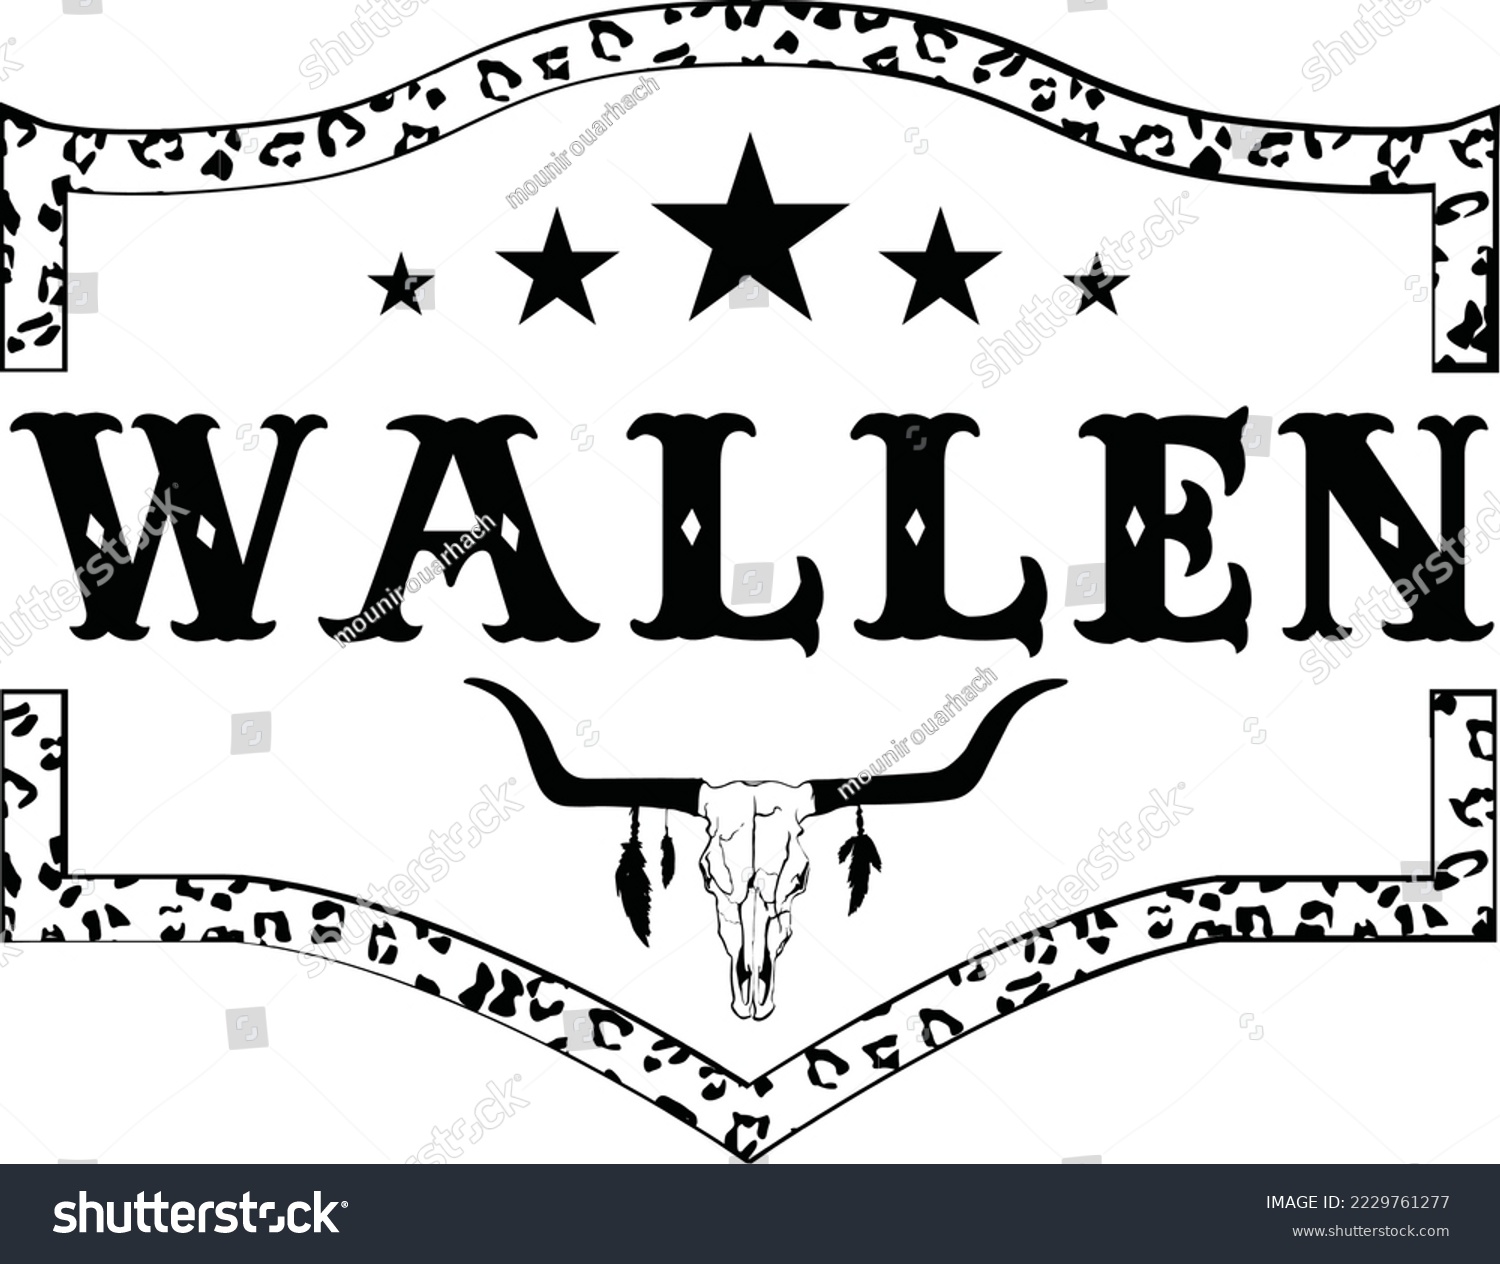 SVG of wallen all black bullskull design artwork 01 svg